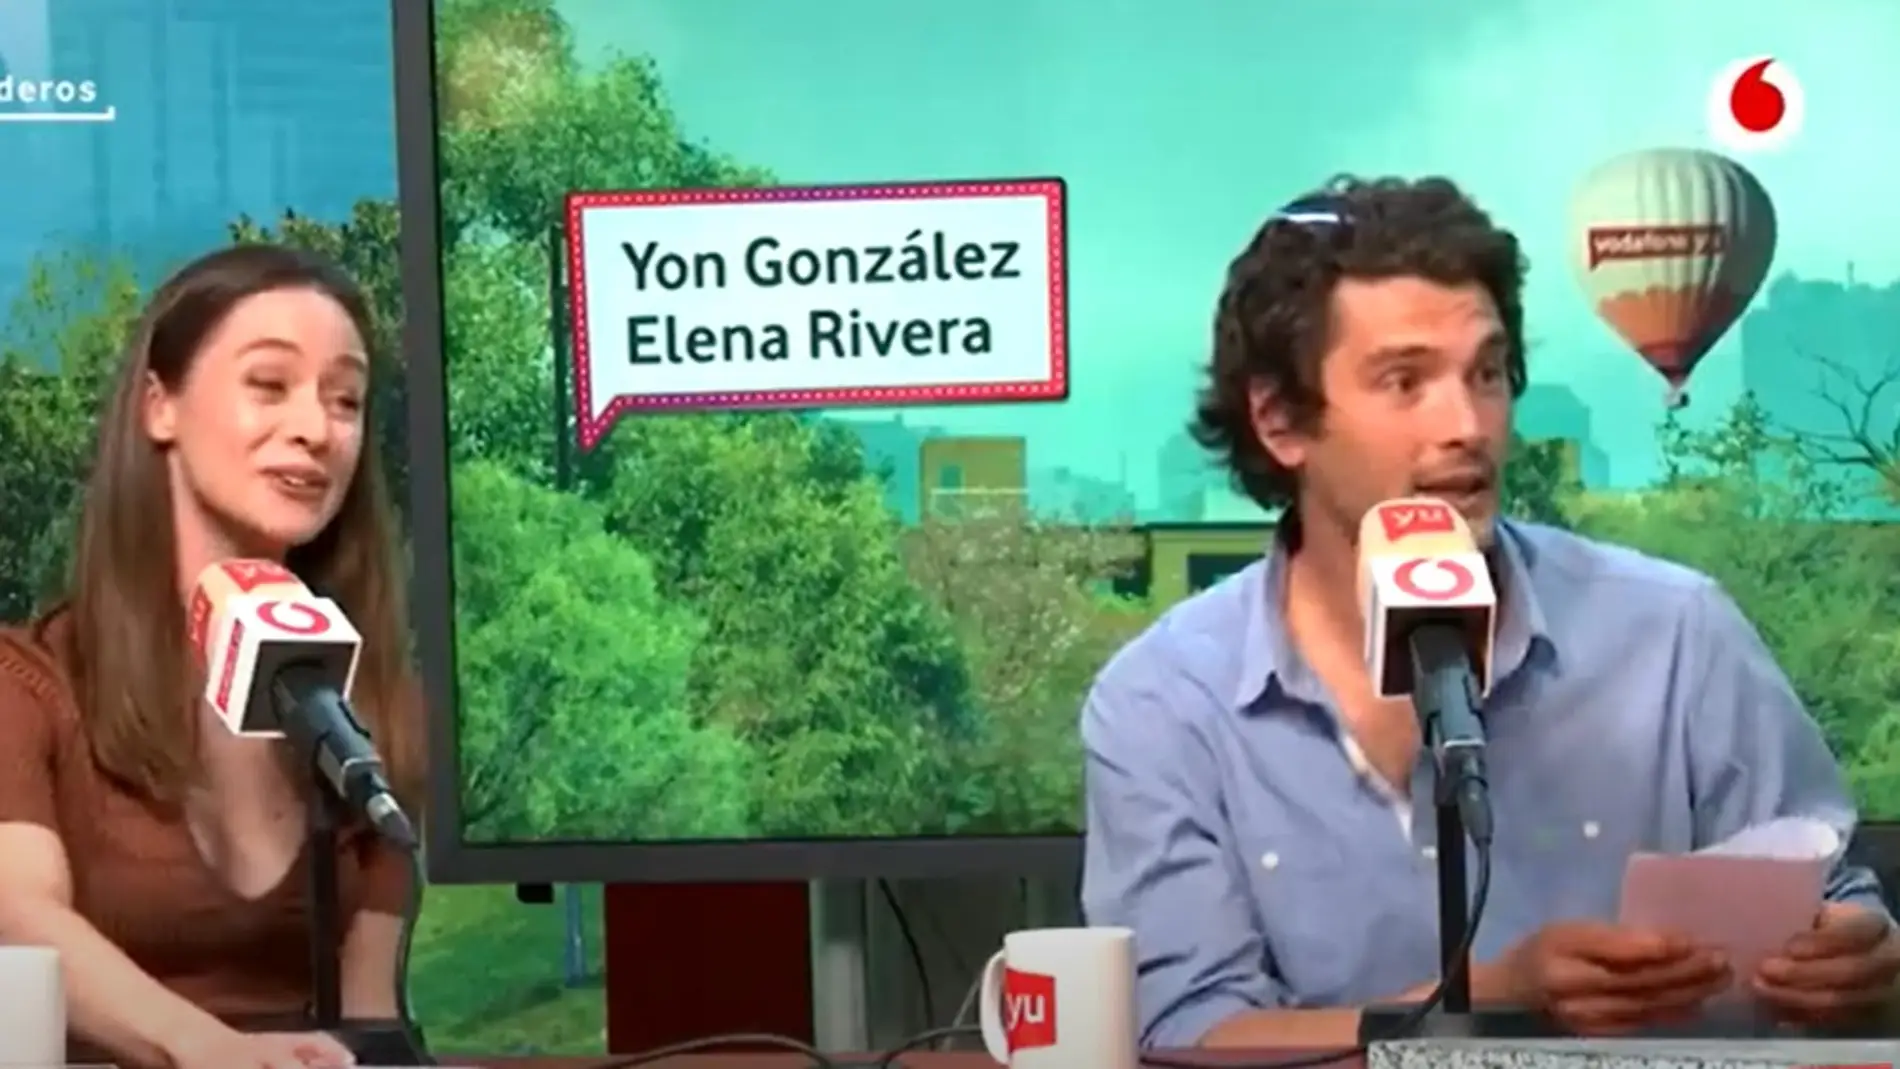 Yon González y Elena Rivera visita yu, No te pierdas nada